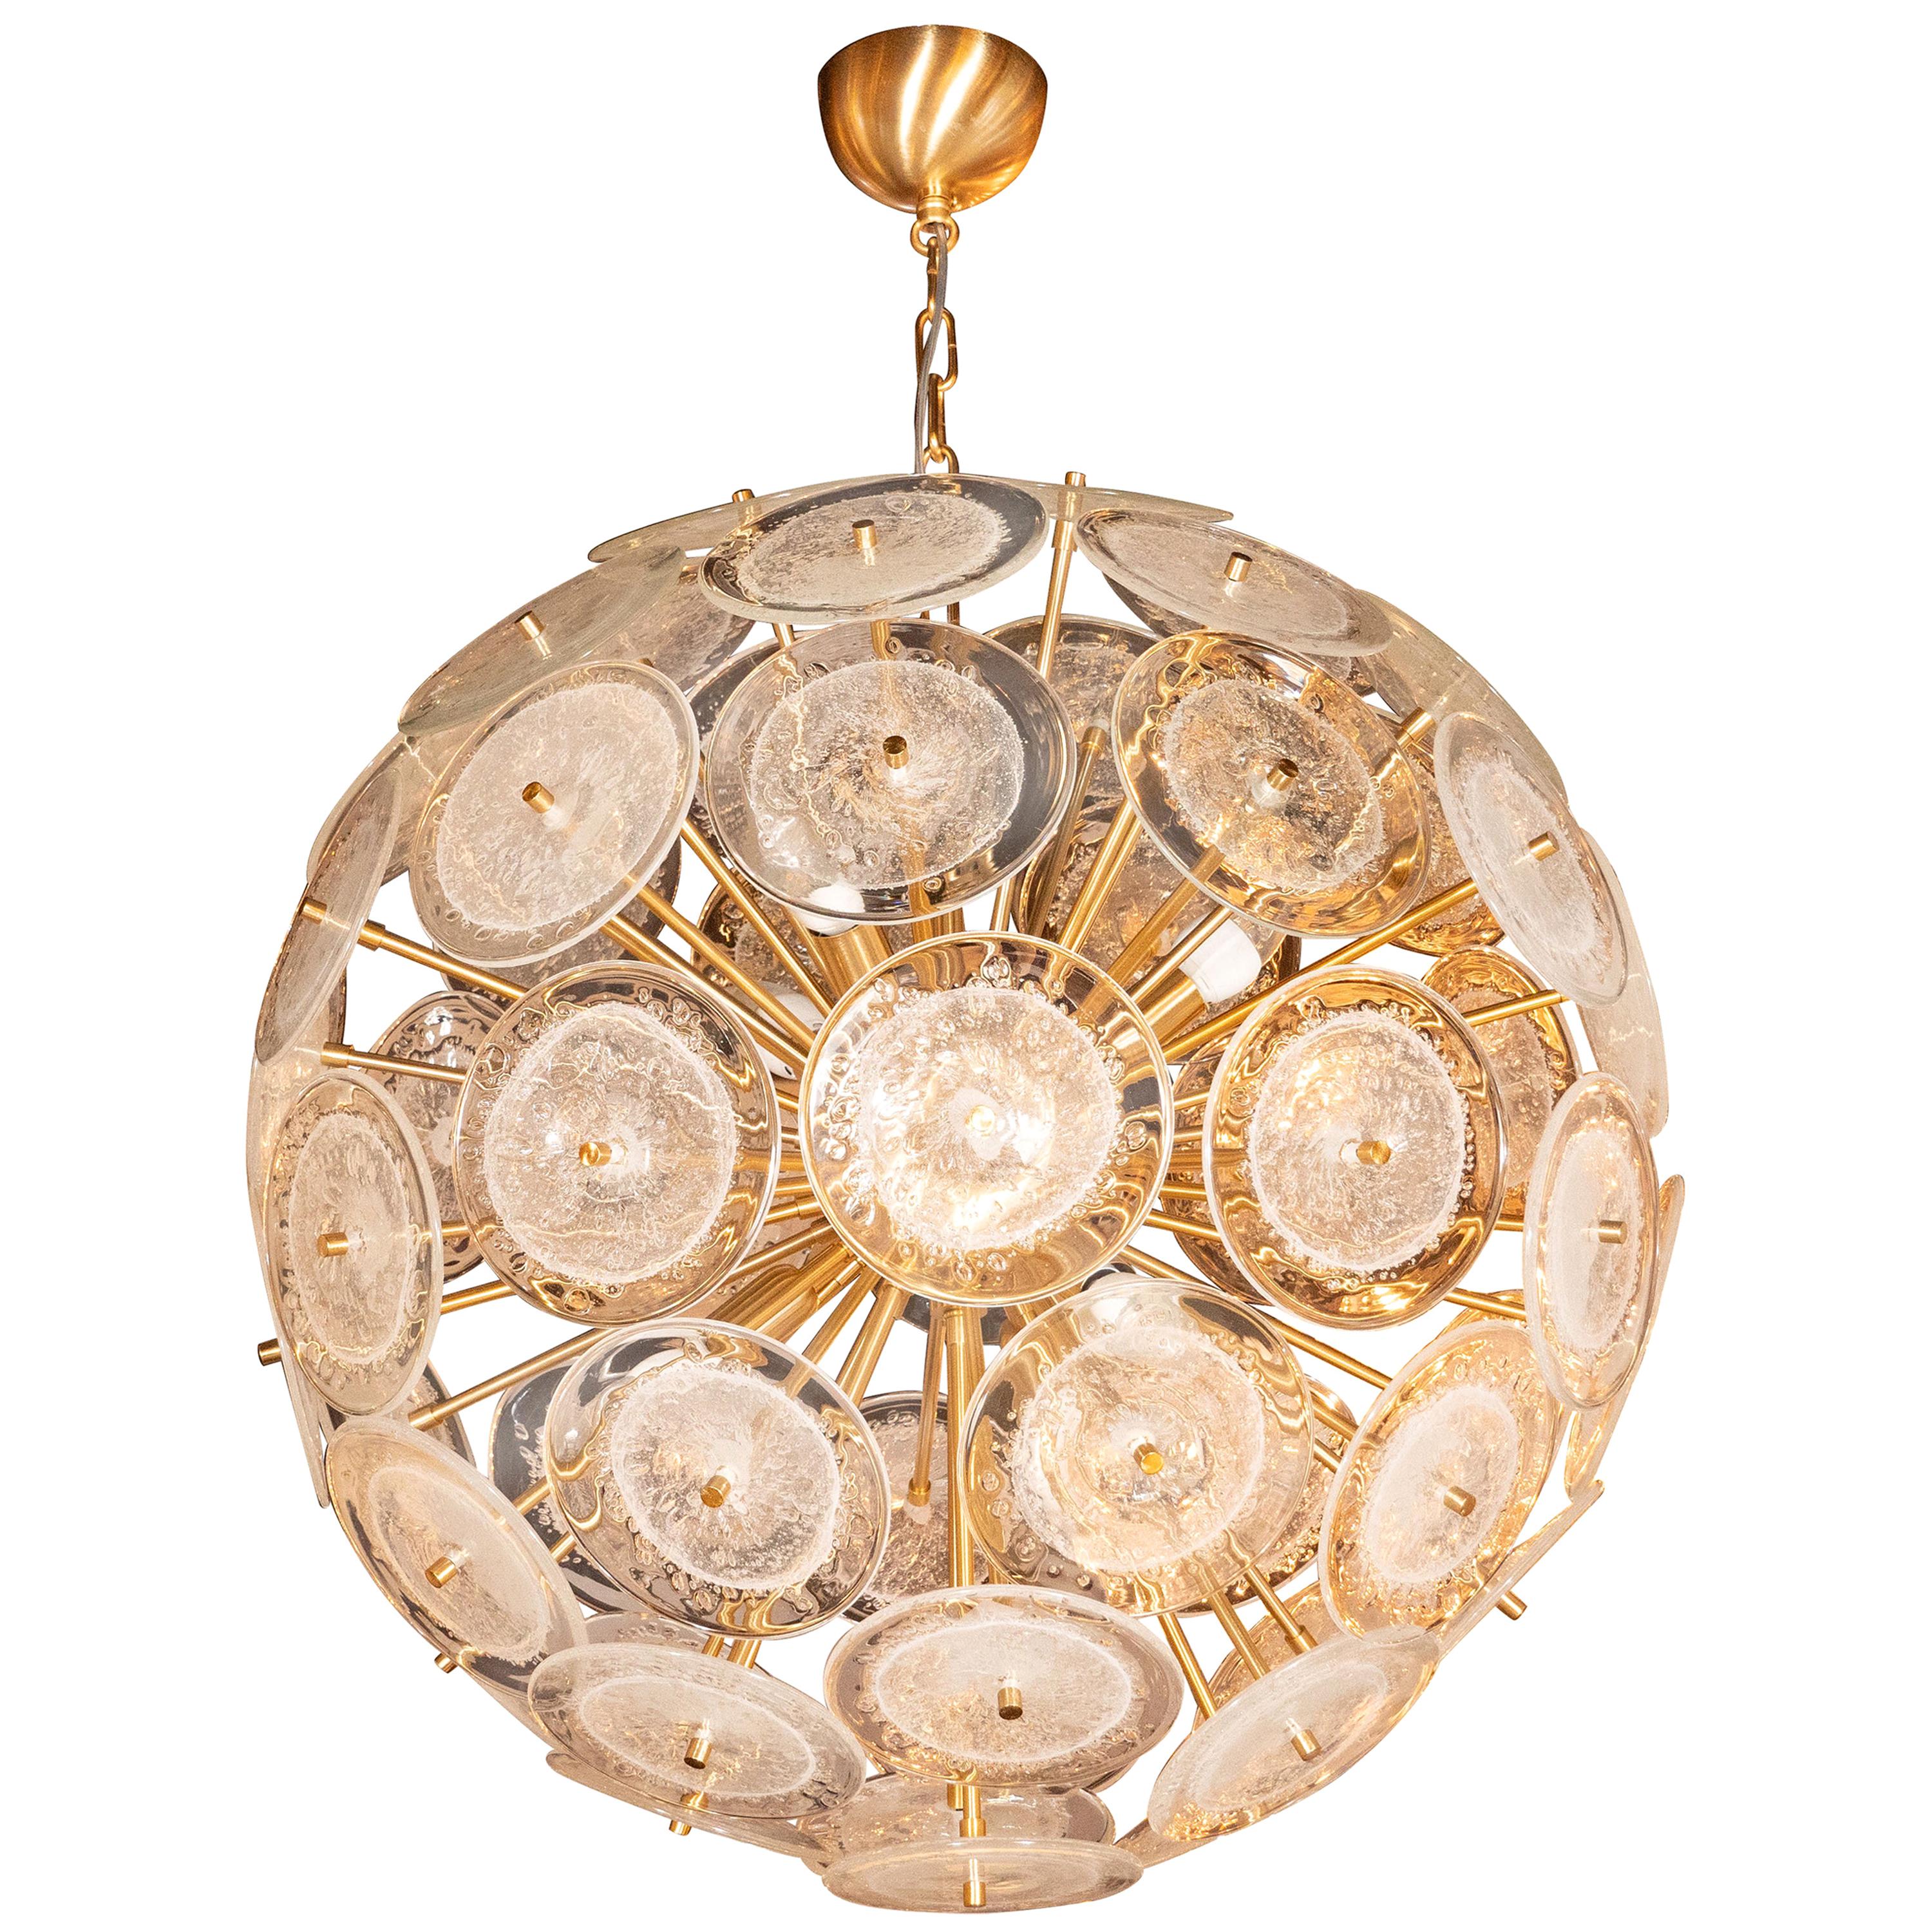 ModernistB rass Sputnik Chandelier w/ Hand Blown Translucent Murano Glass Discs